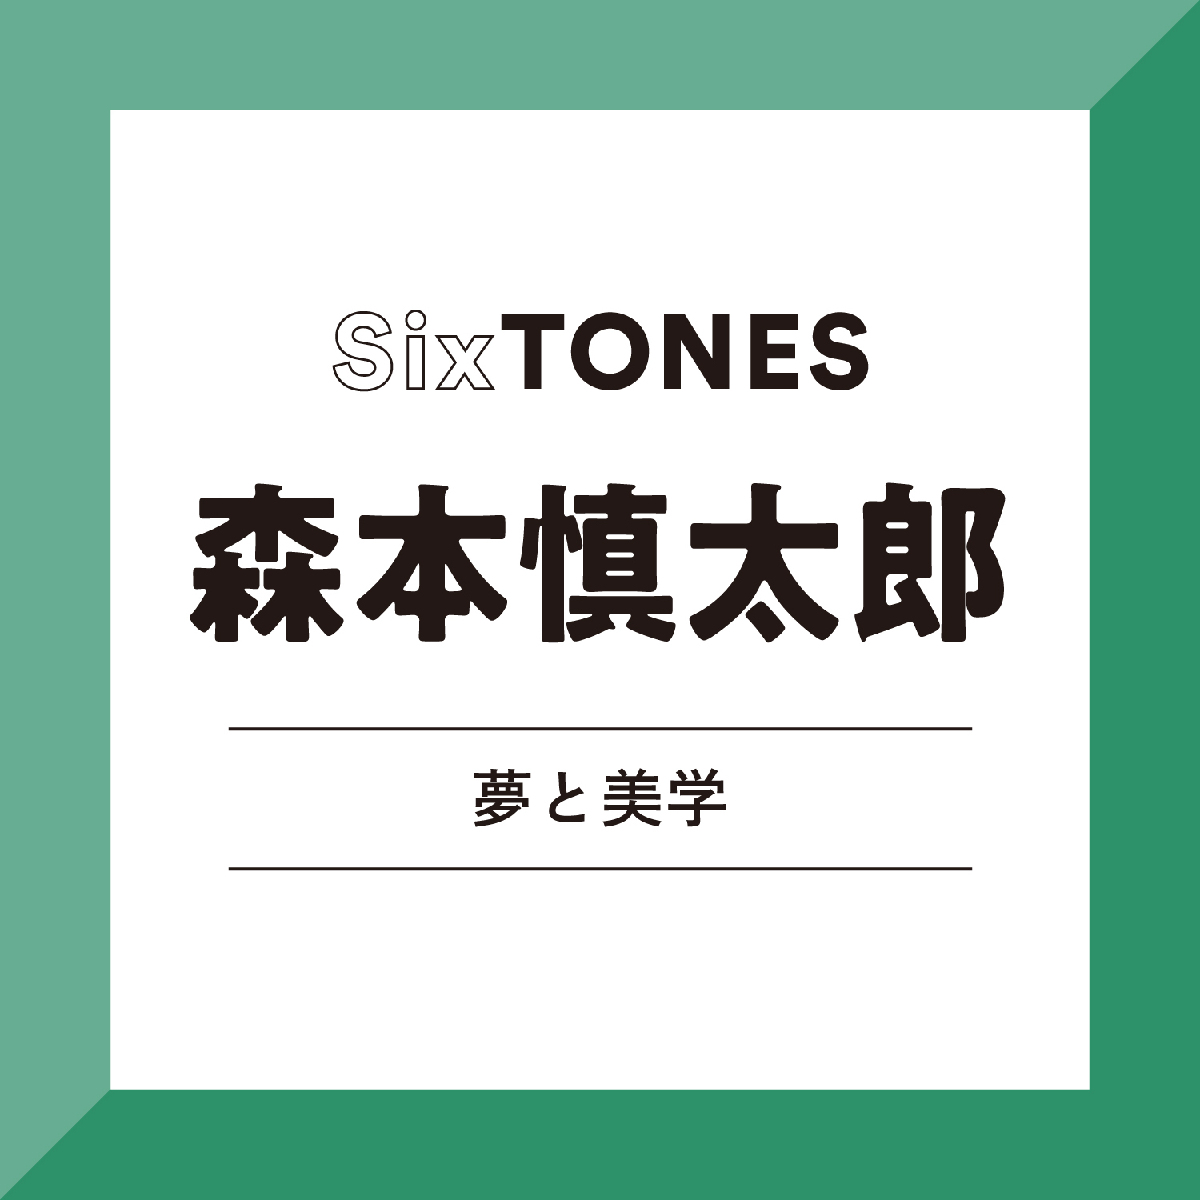 【SixTONES】森本慎太郎が一度は考えた芸能界以外の道「中学の時にすごくいい先生に出会って、自分もそんな先生になりたかった」